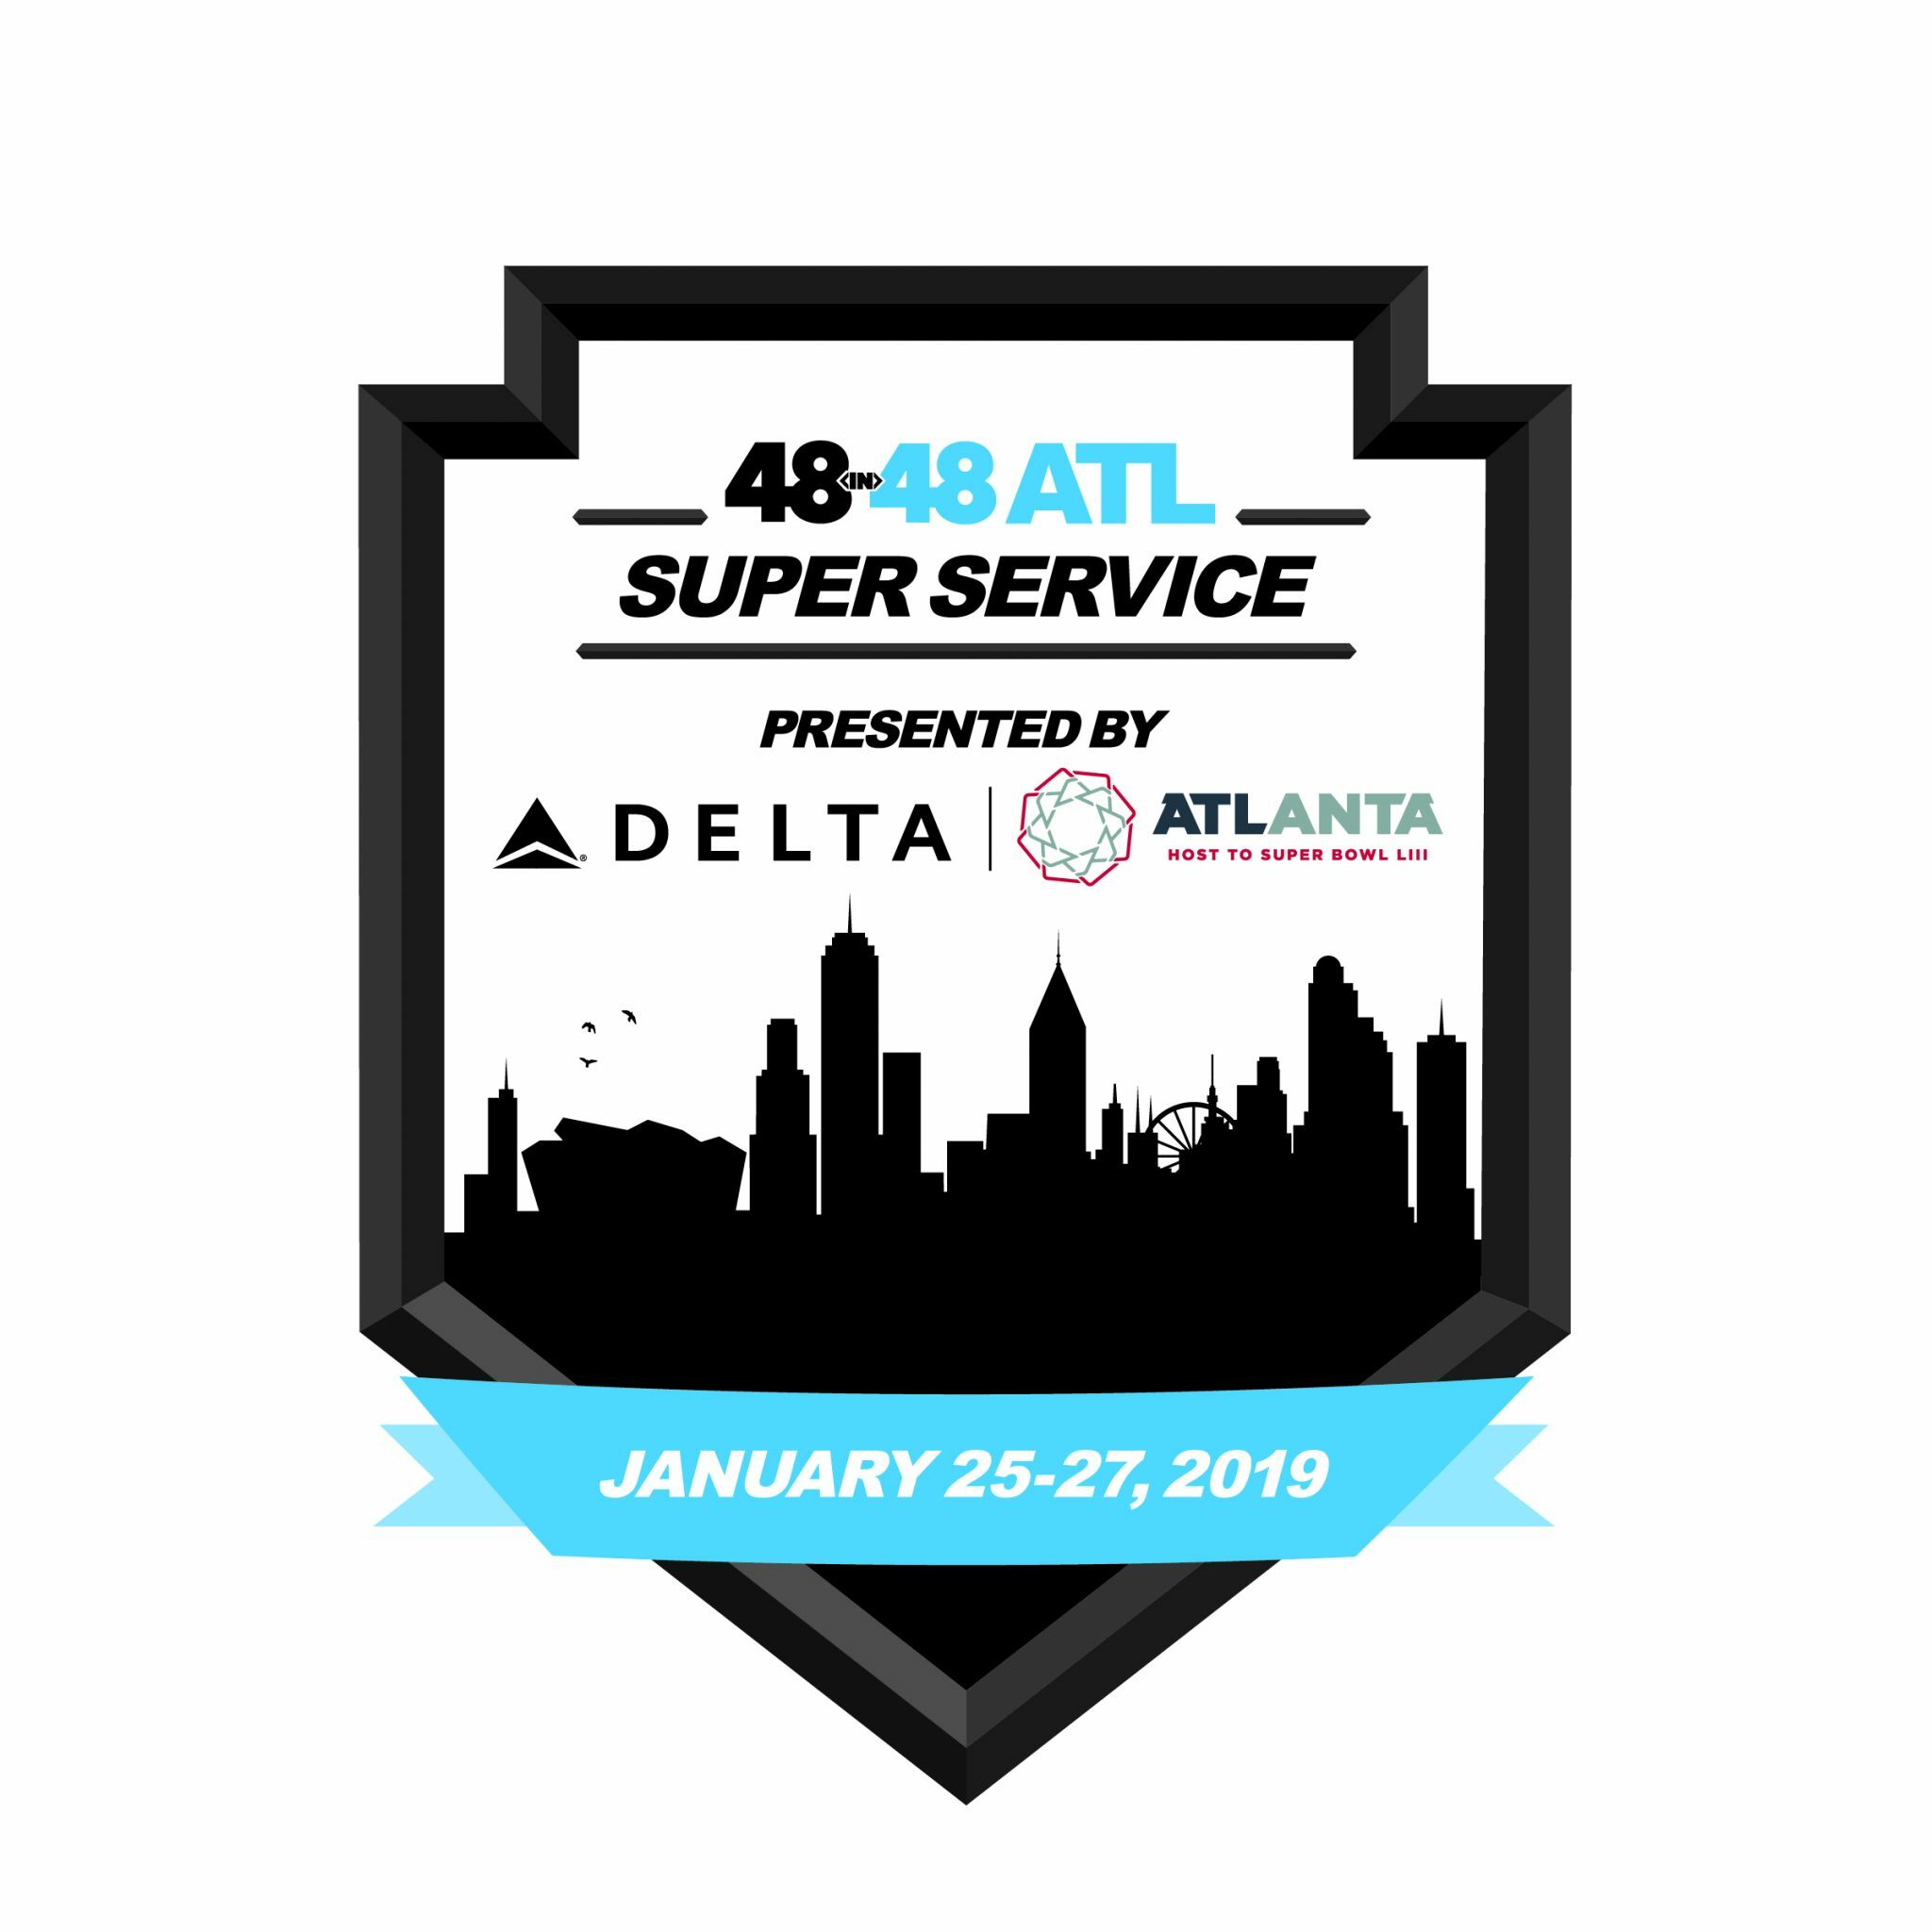 48in48 SBHC Delta - ATL super service_FINAL